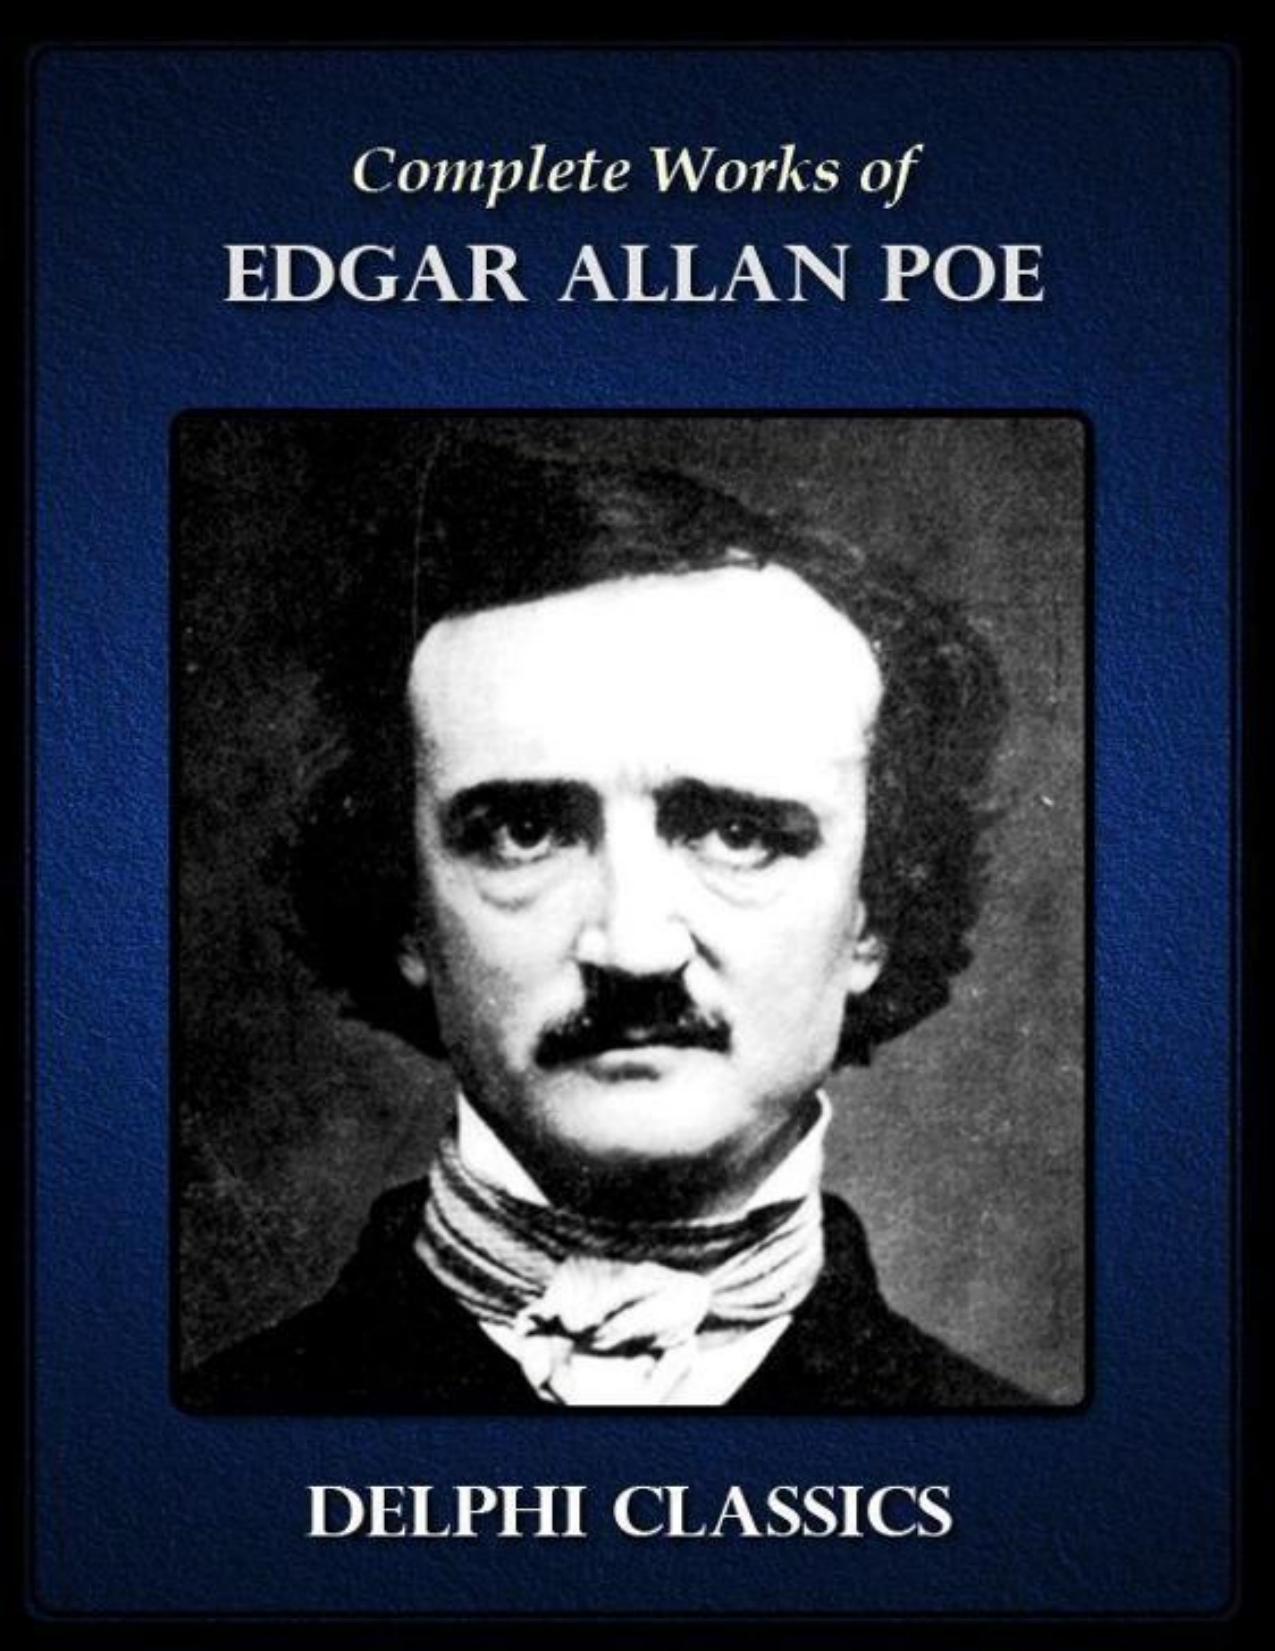 Delphi Complete Works of Edgar Allan Poe (Illustrated) by POE EDGAR ALLAN